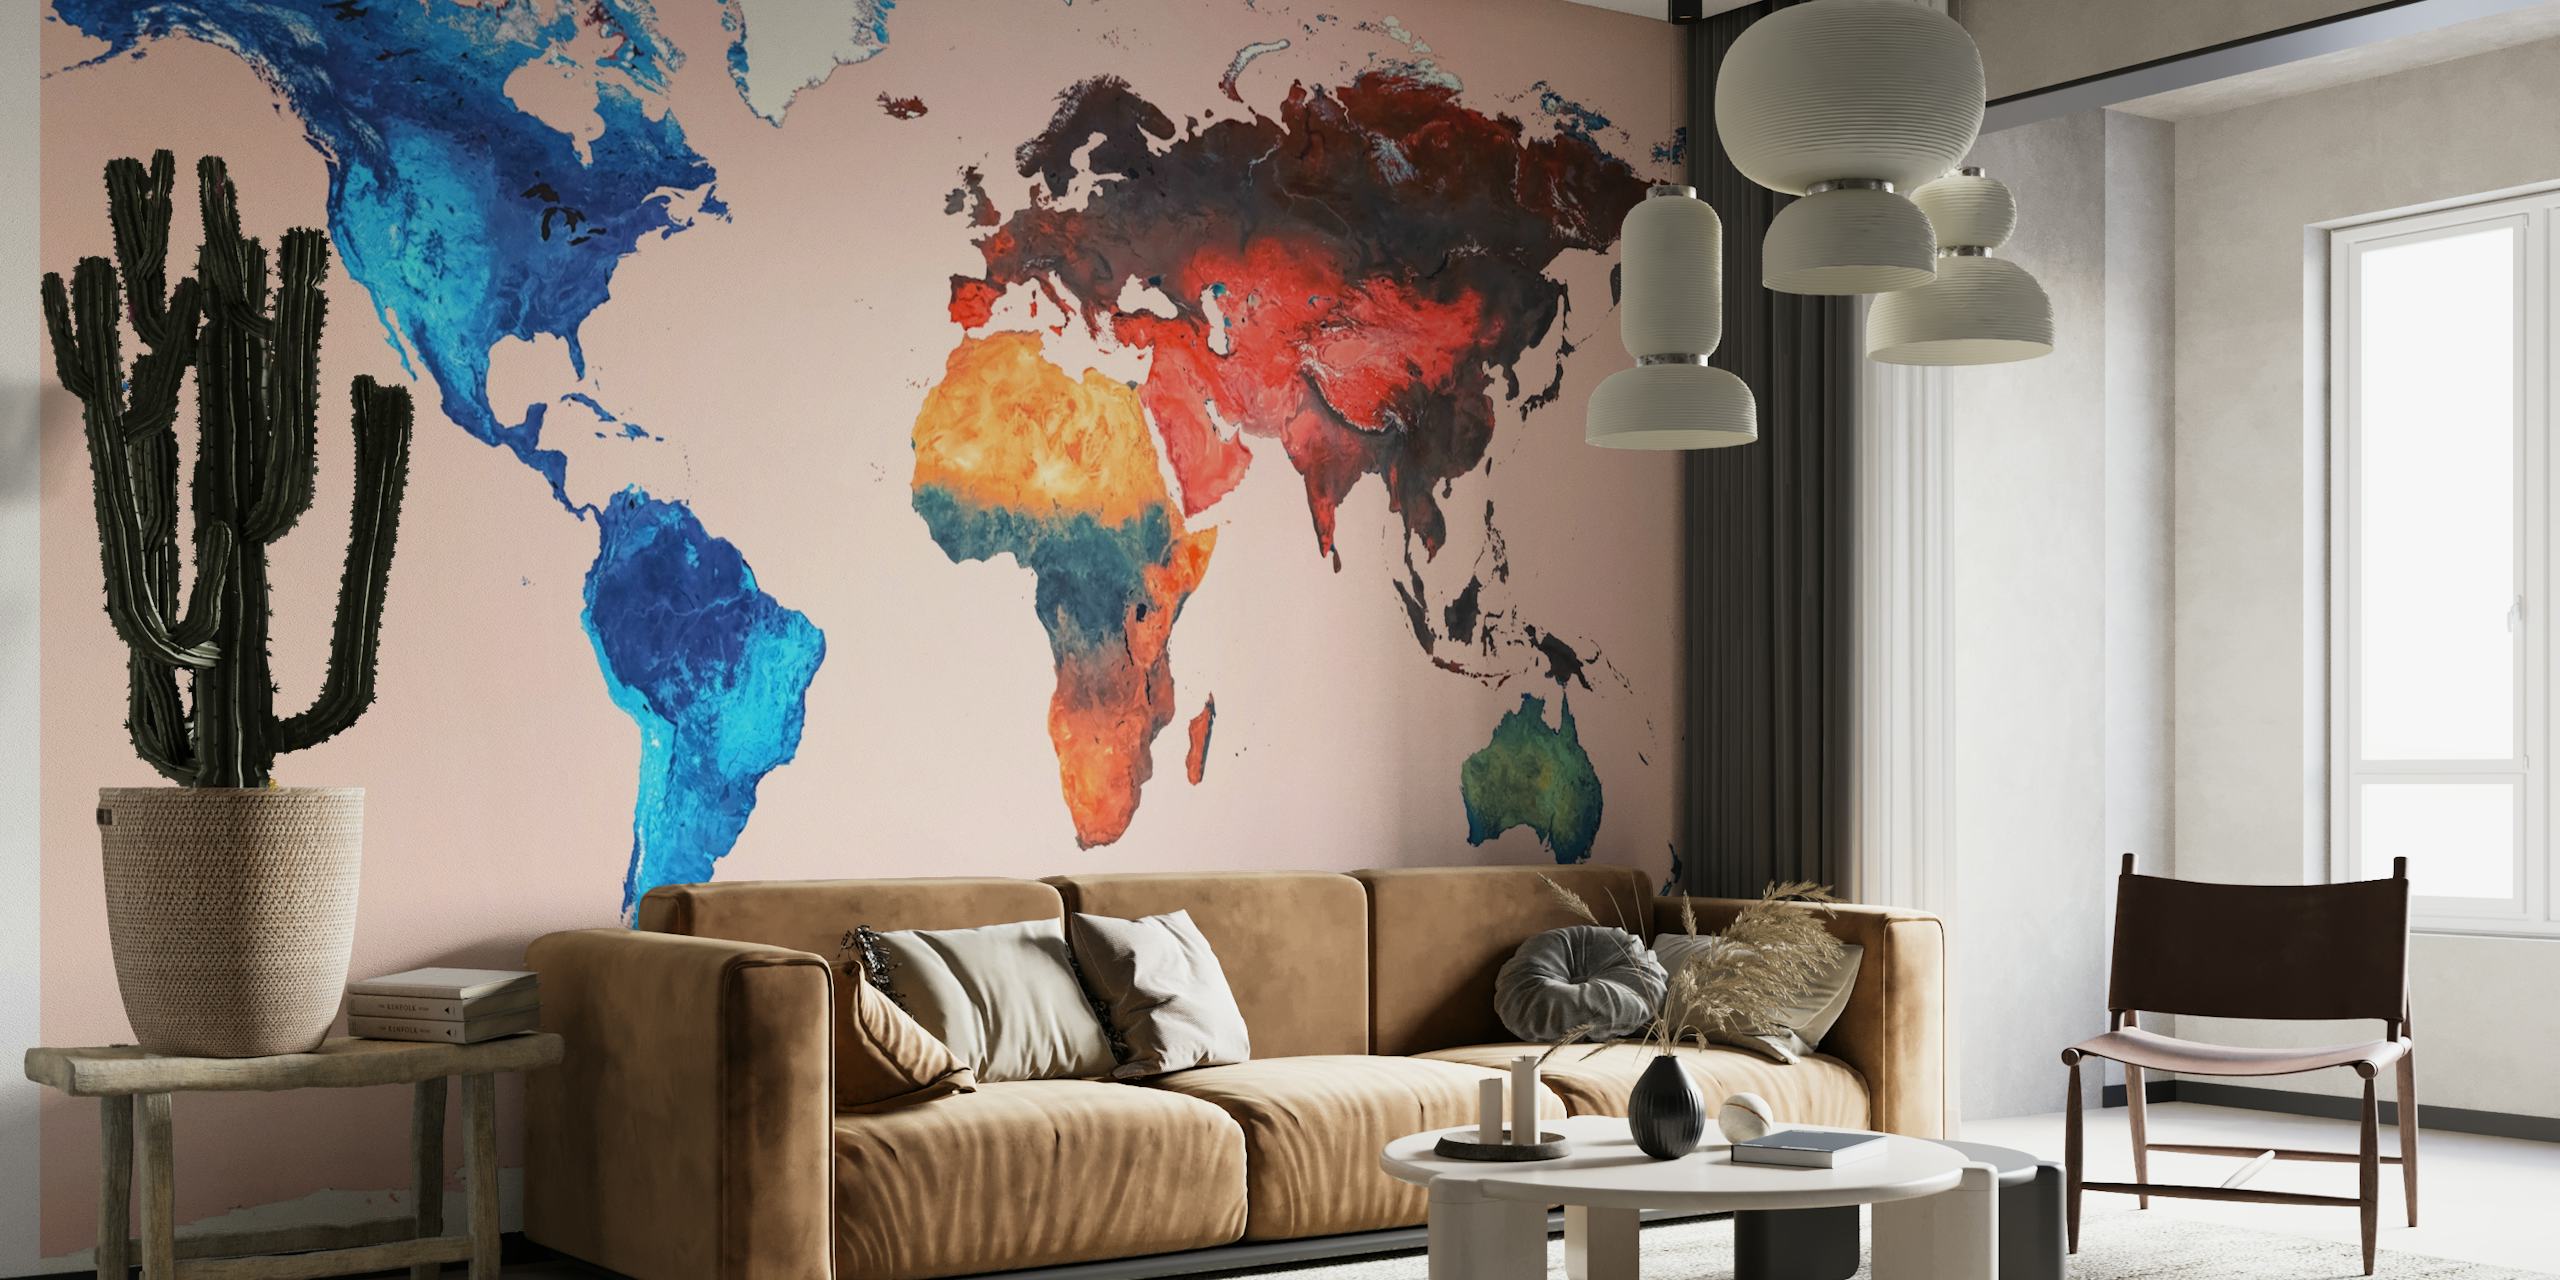 World colorful map papel pintado